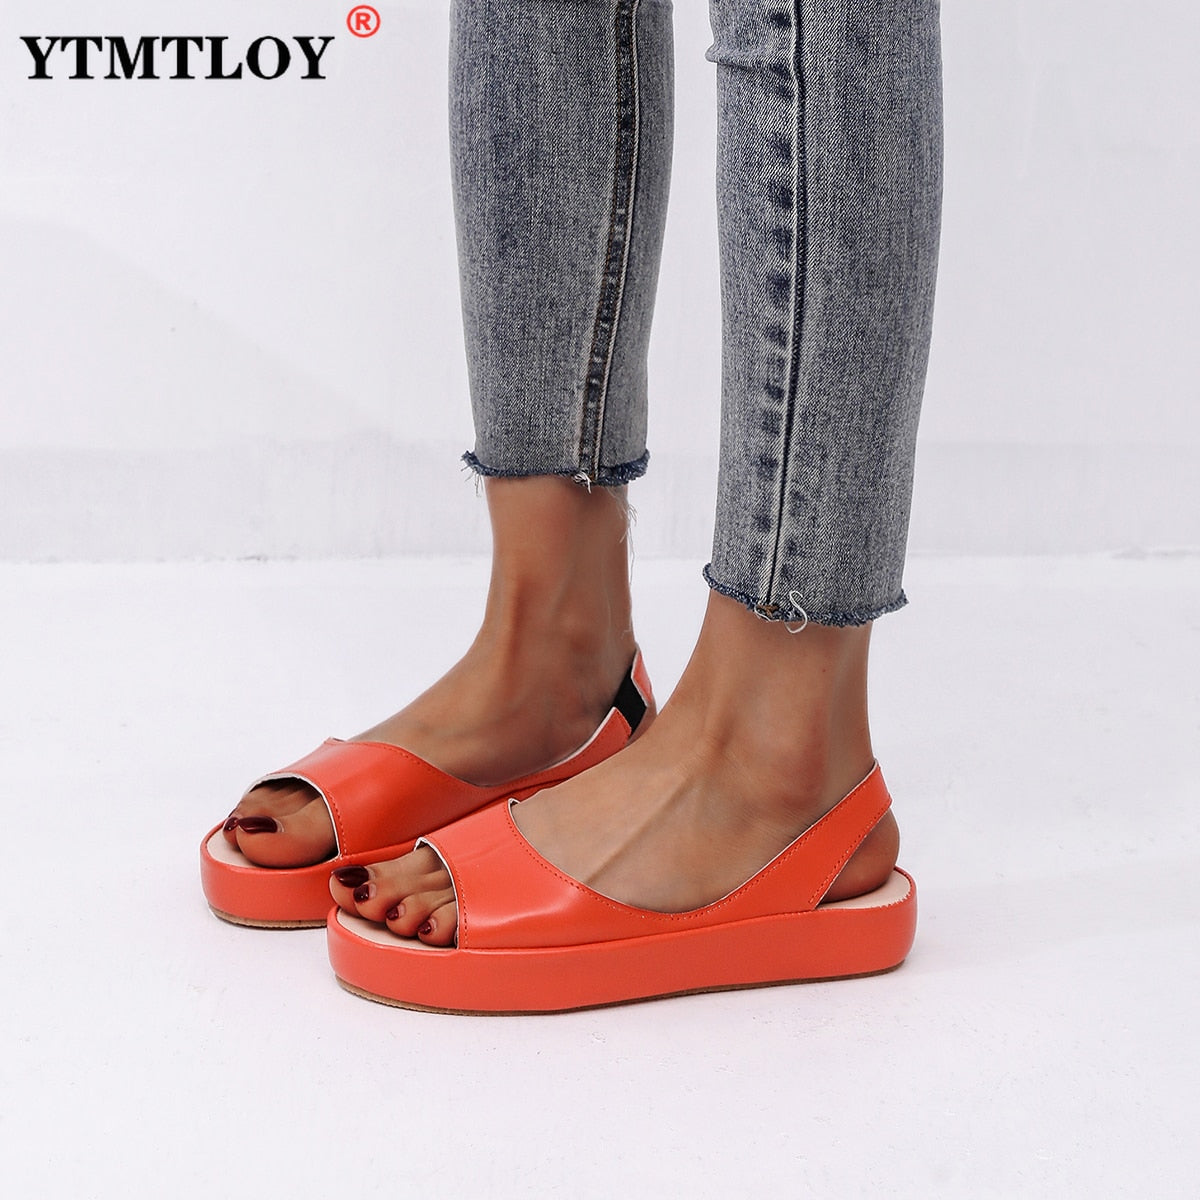 Flat Sandals Women Casual Outdoor Slippers